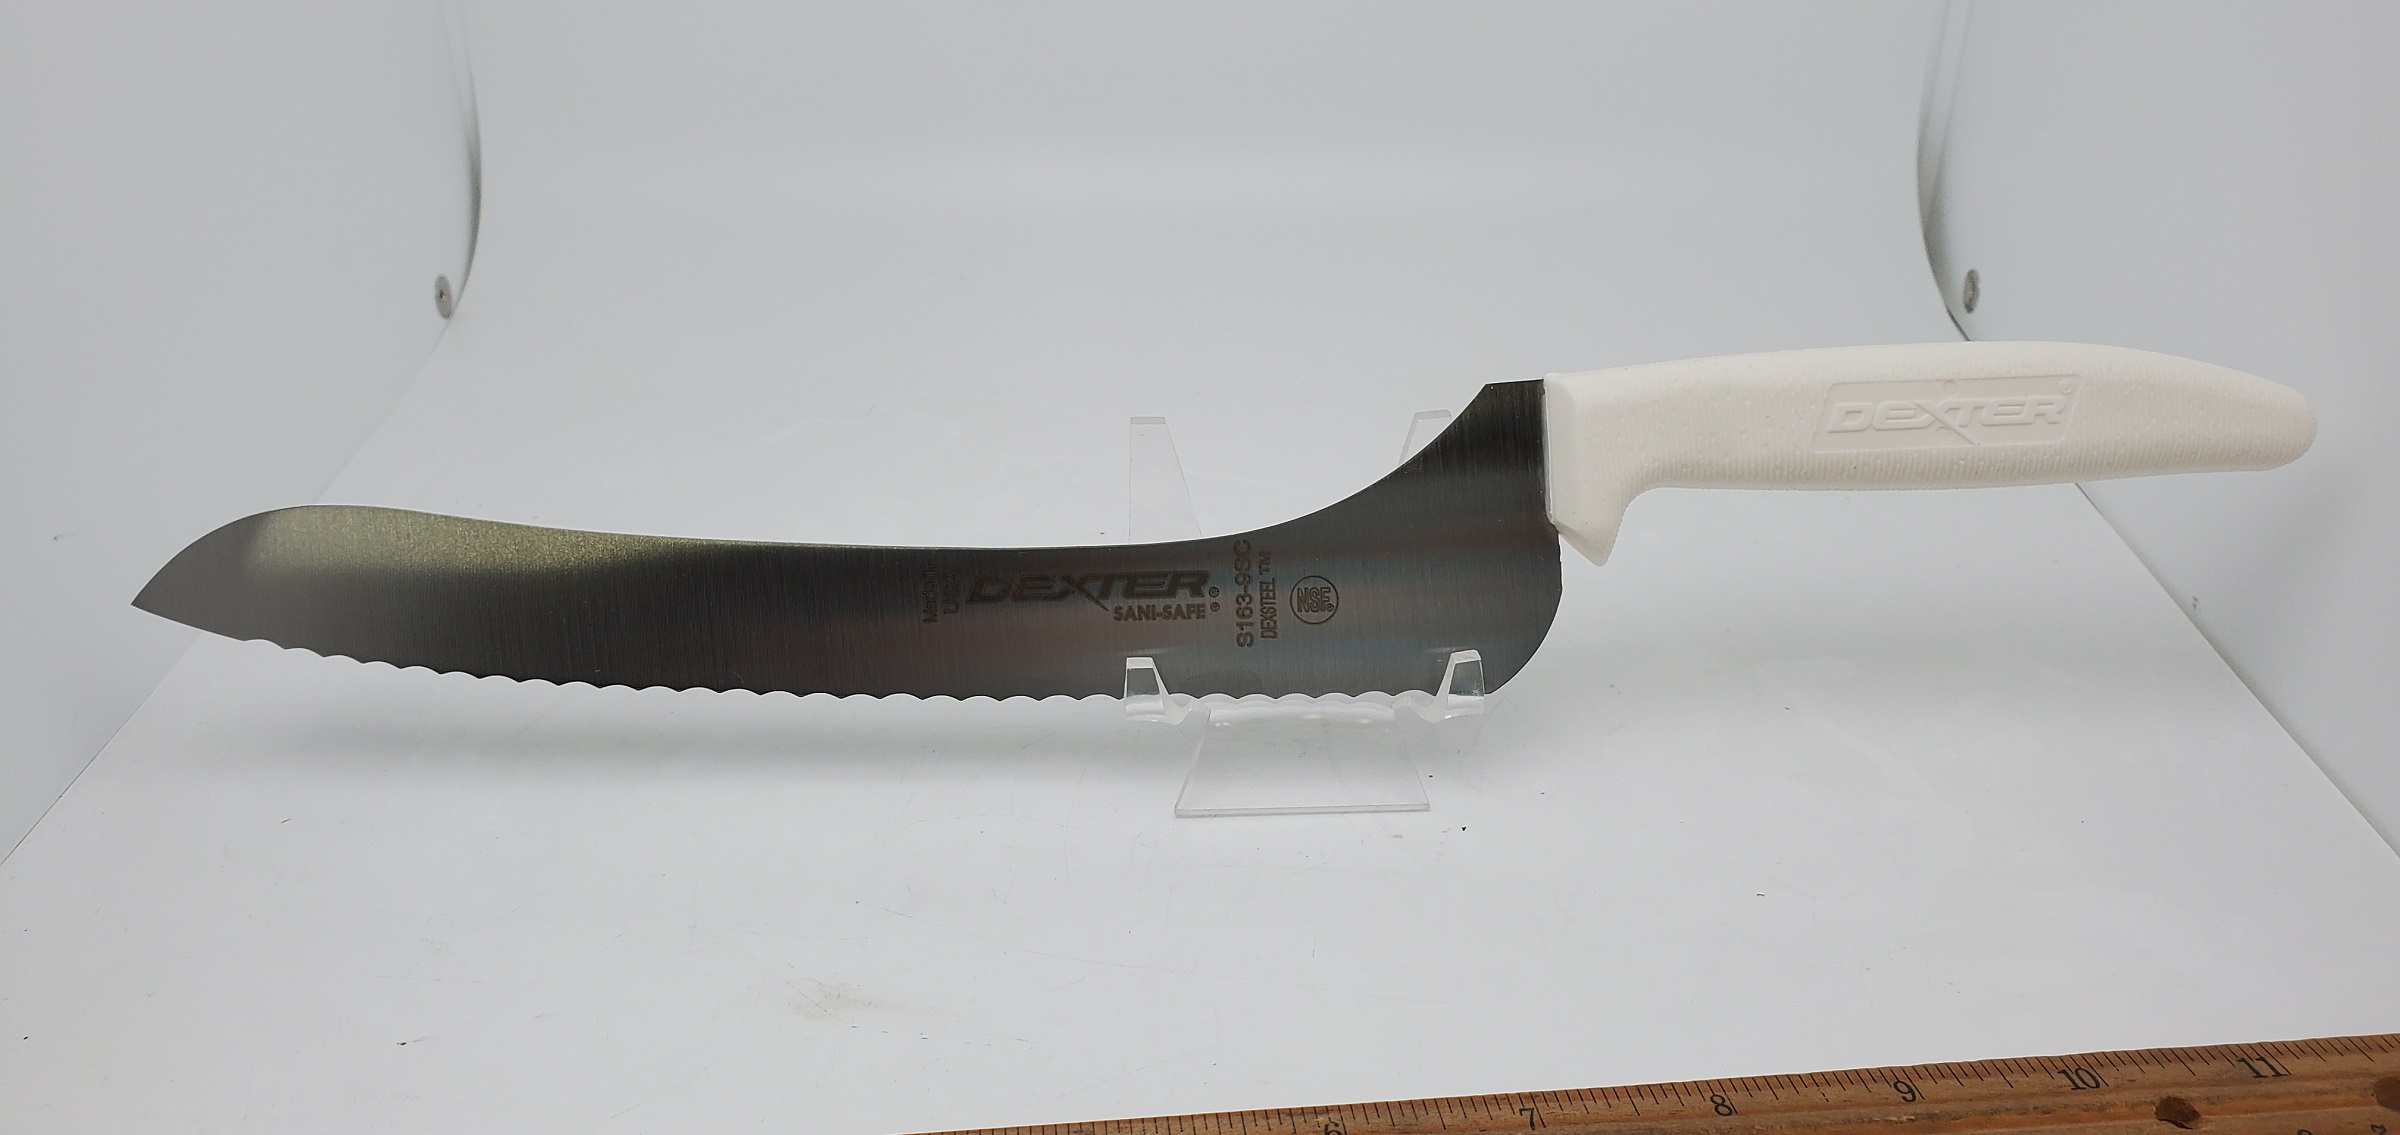 Dexter-Russell 13583 Offset Slicer/Bread Knife 9